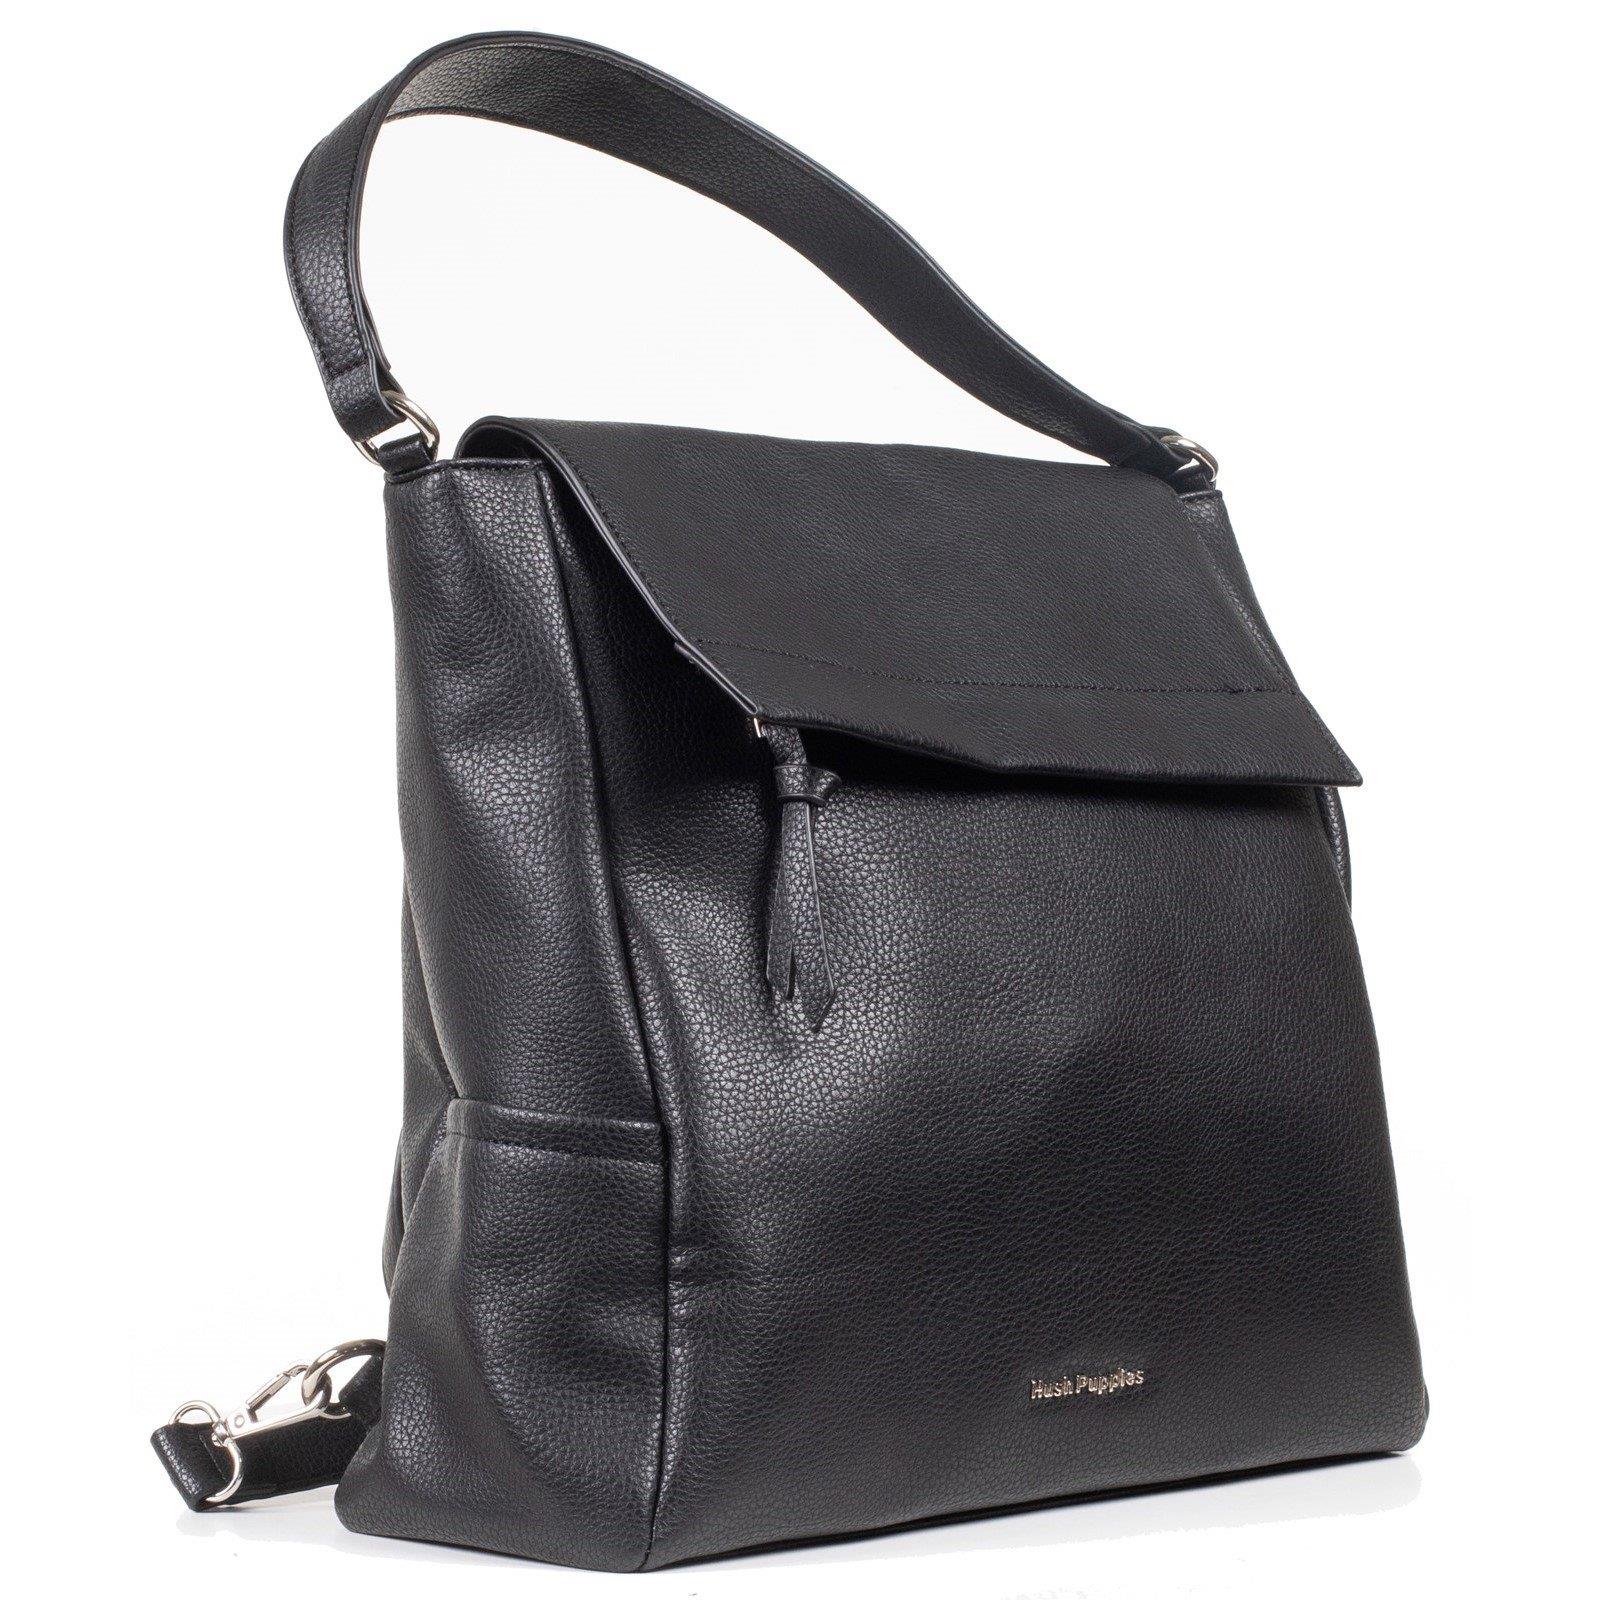 Hush Puppies Chelsea black PU faux leather backpack women's handbag